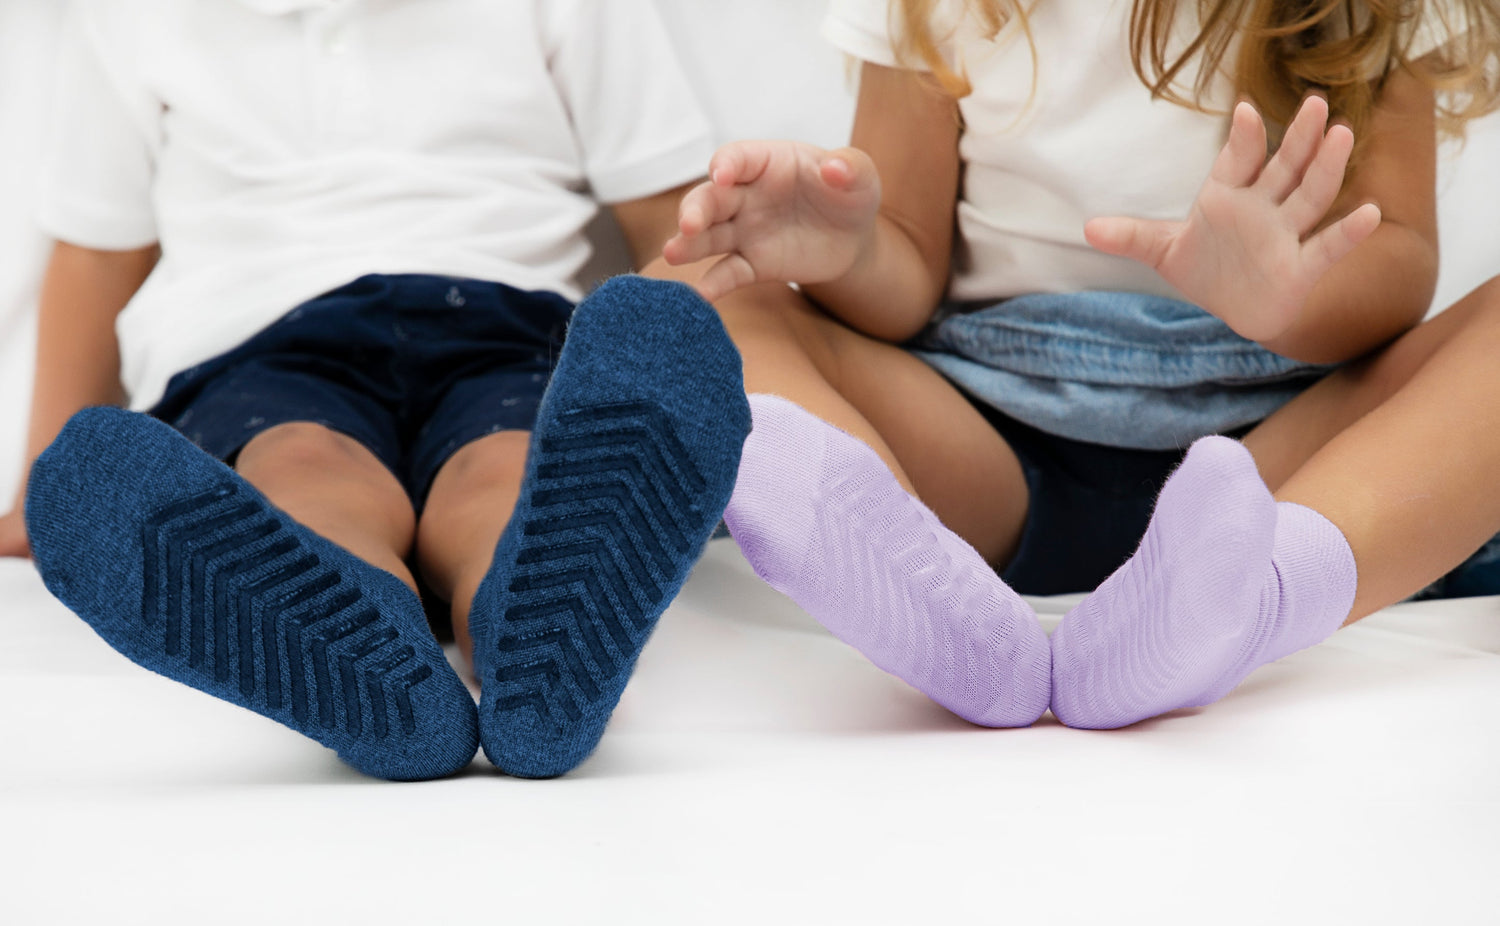 Blue/Black/Grey Grip Socks for Toddlers & Kids - 4 pairs